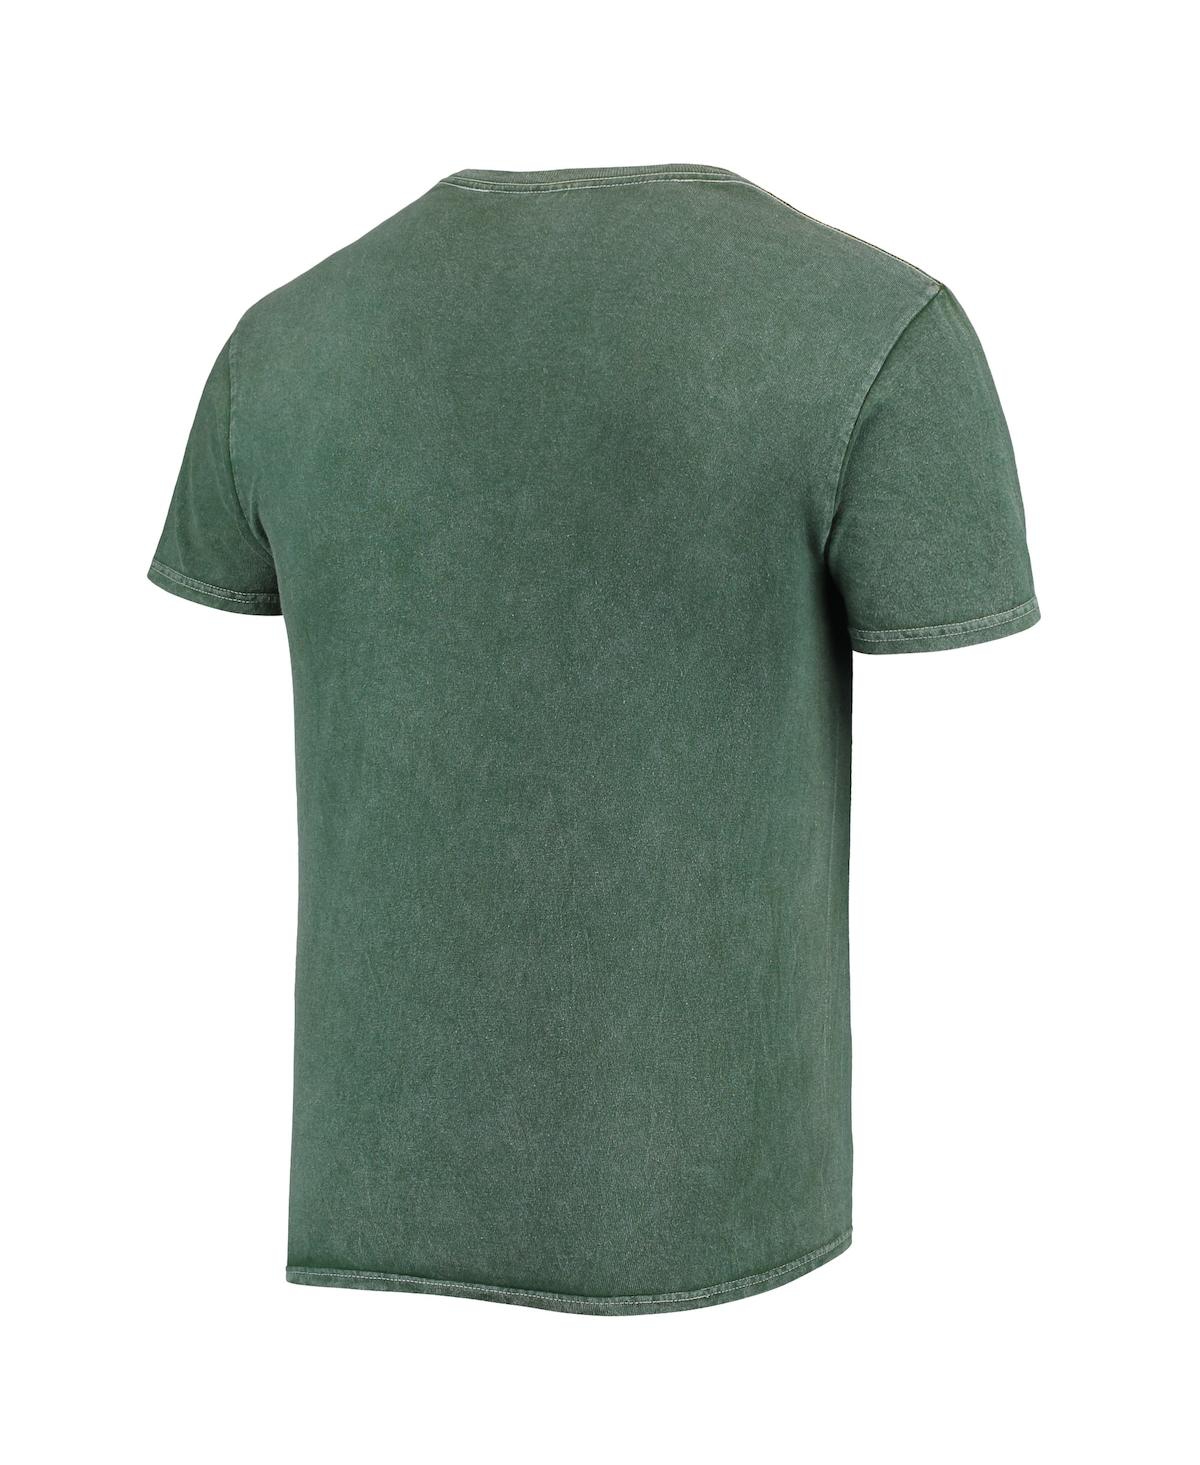 Shop 47 Brand Men's '47 Green Green Bay Packers Rocker Vintage-inspired Tubular T-shirt